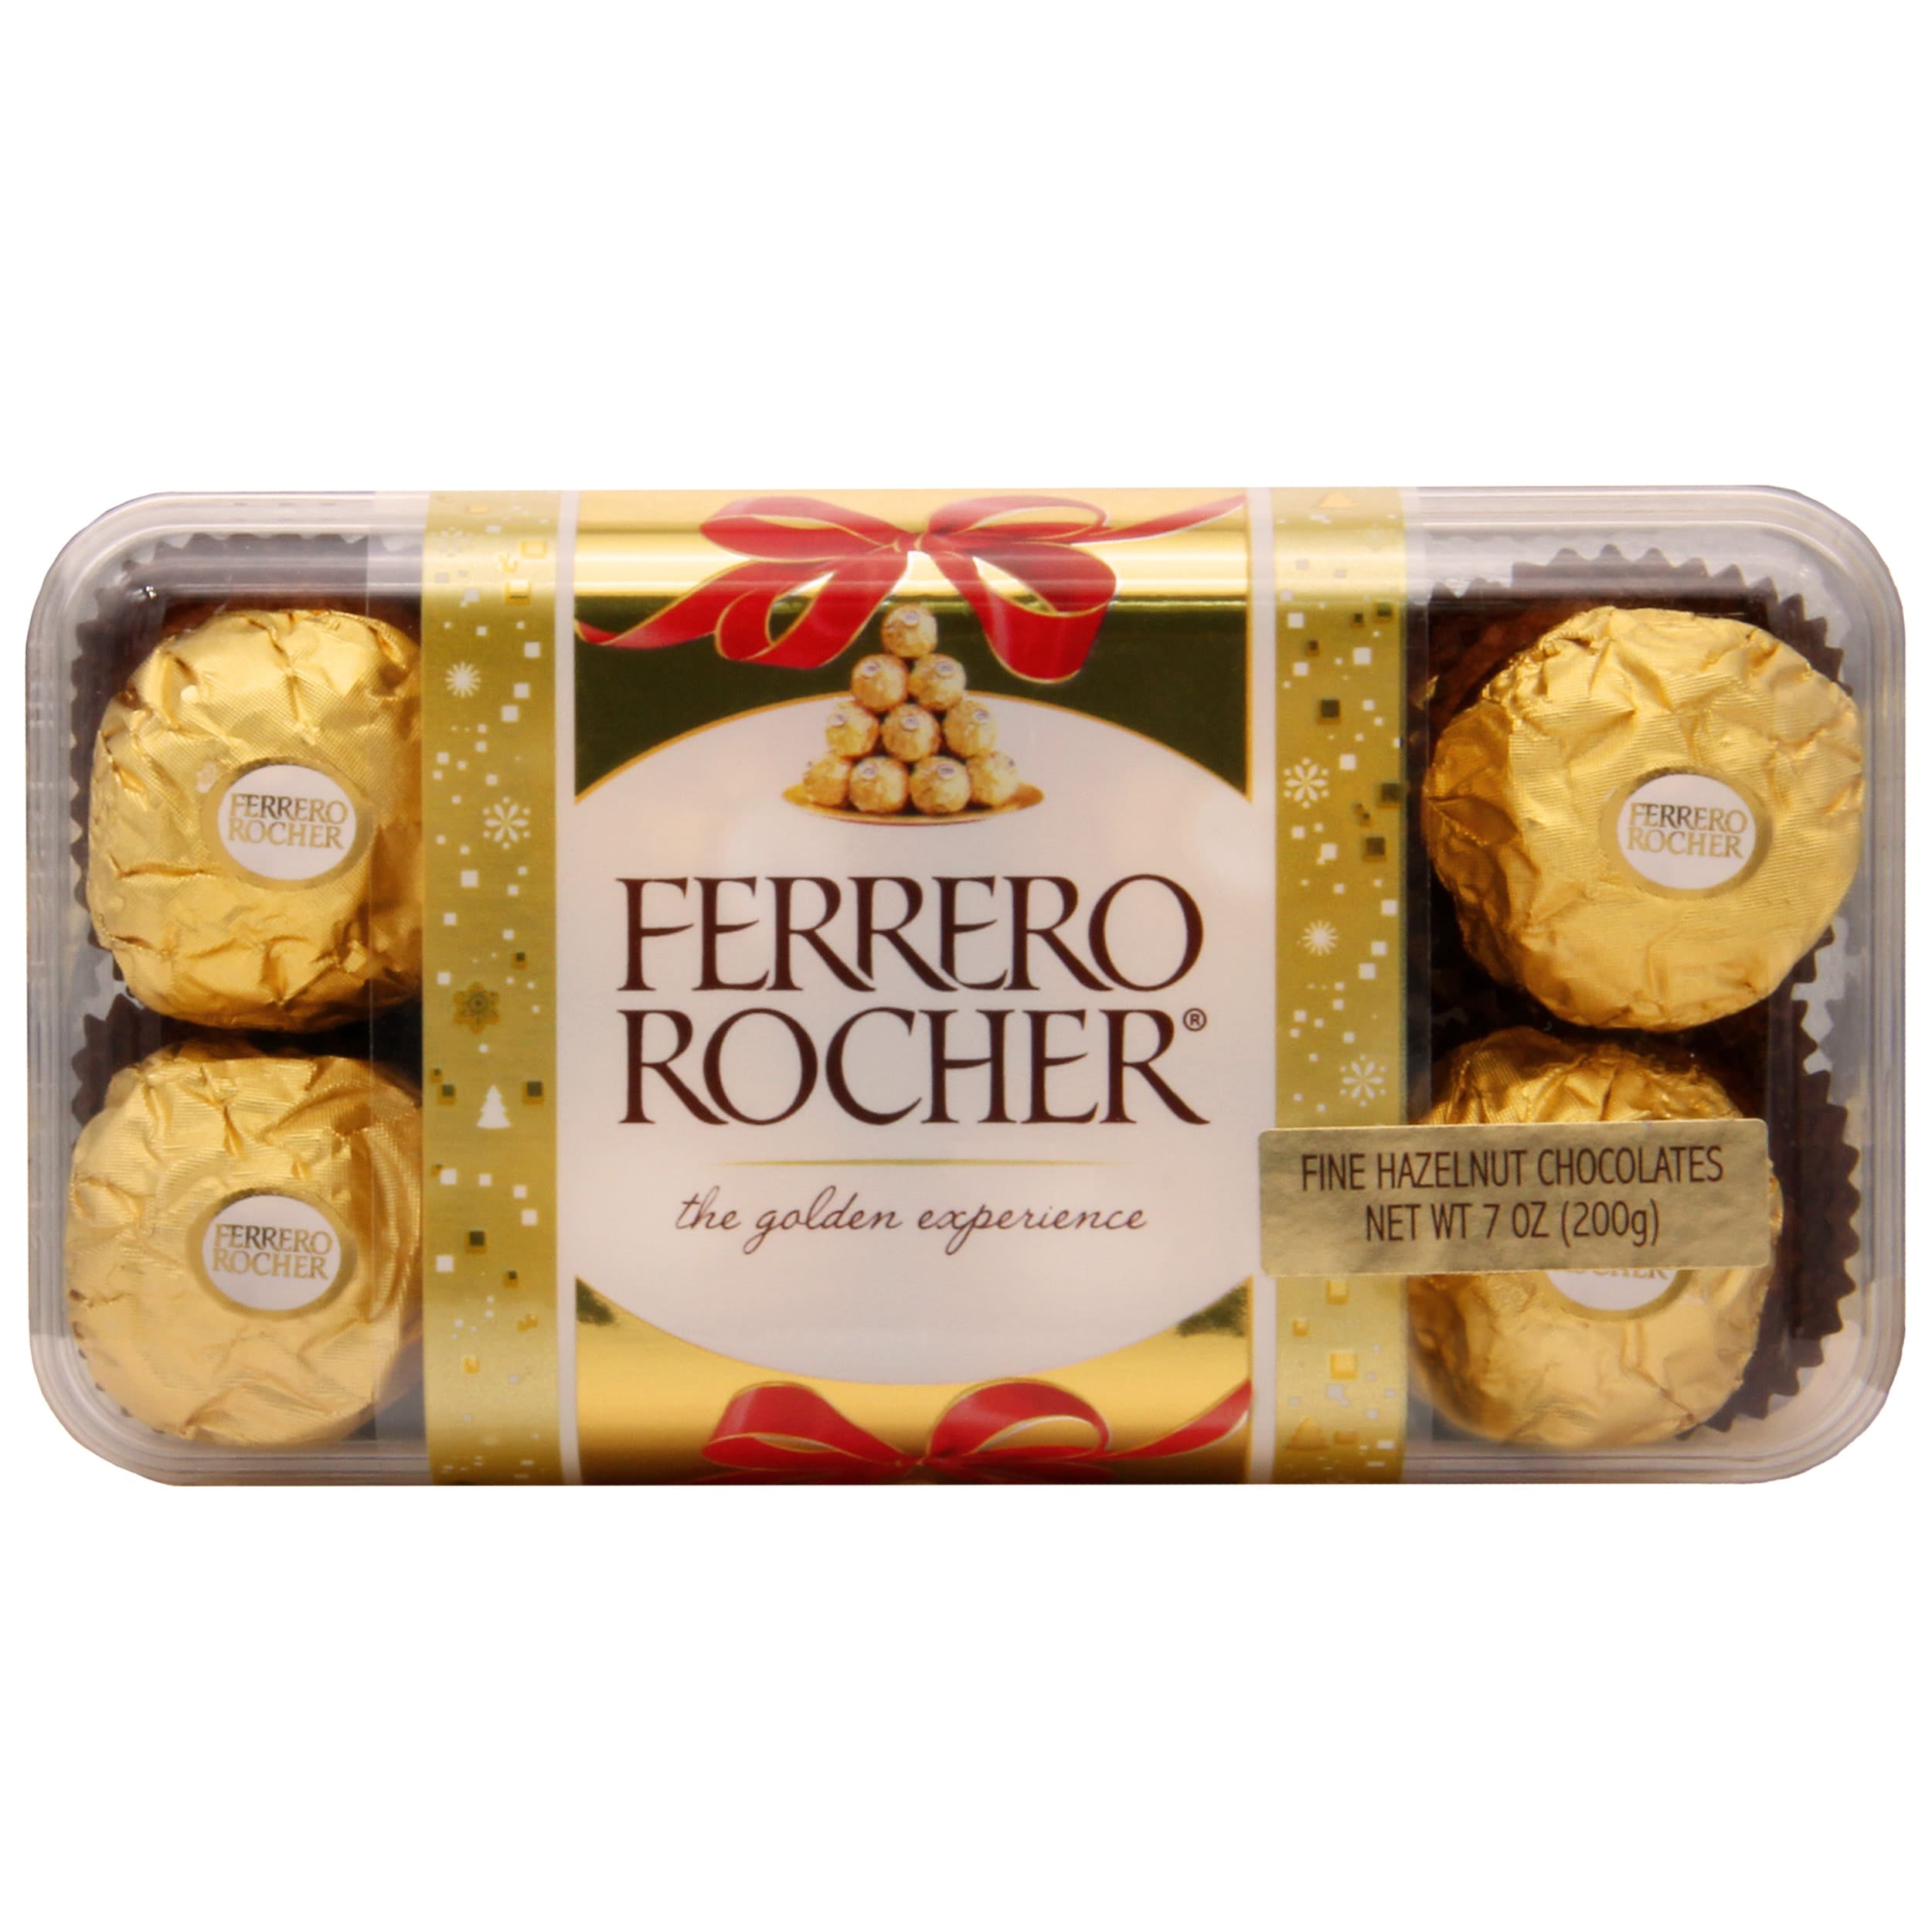 Ferrero Collection, 16 Count, Assorted Milk and Dark Chocolate Hazelnut and  Coconut, Valentine's Chocolate, 6.1 oz